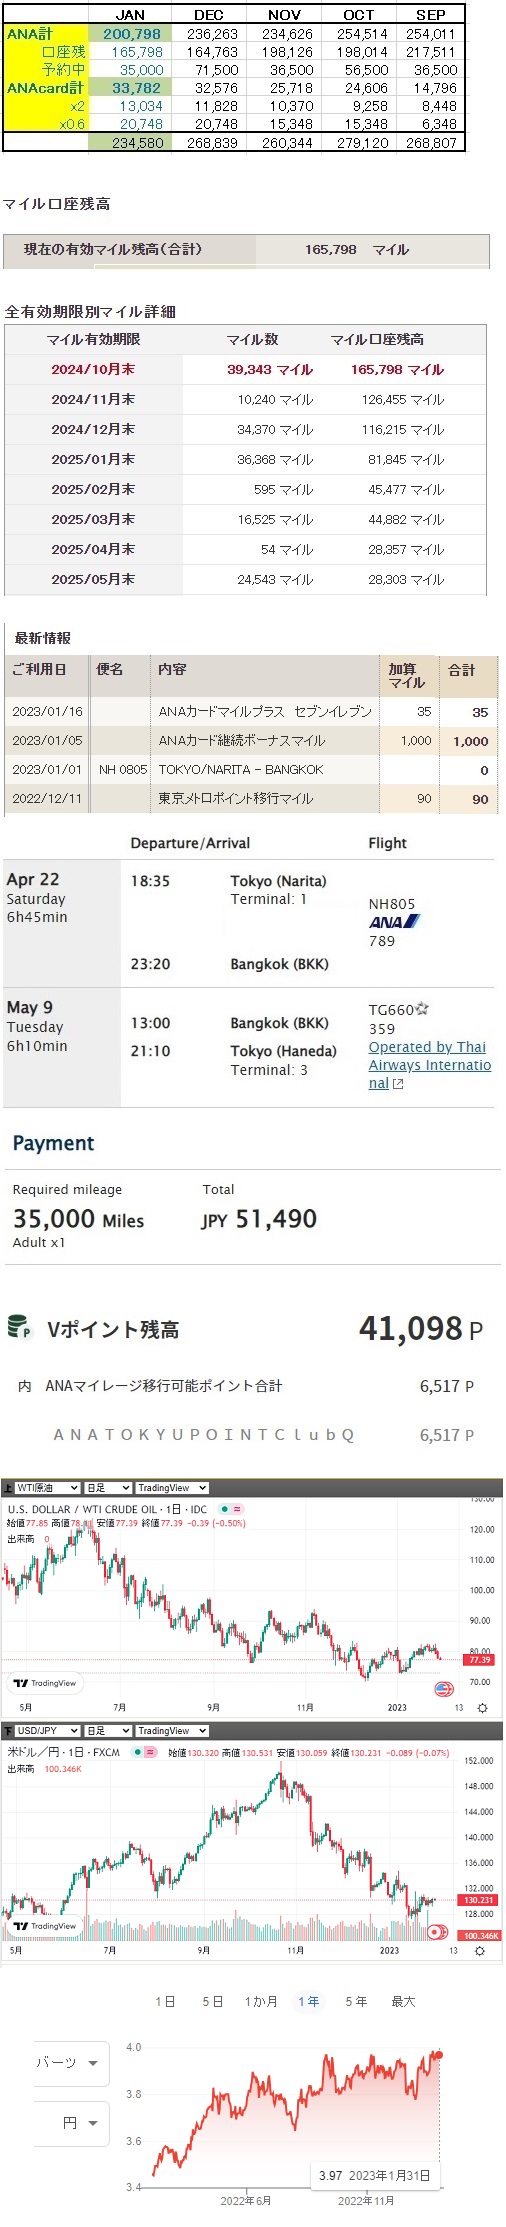 【ANAマイル】 累計獲得973,298M→772,500M搭乗